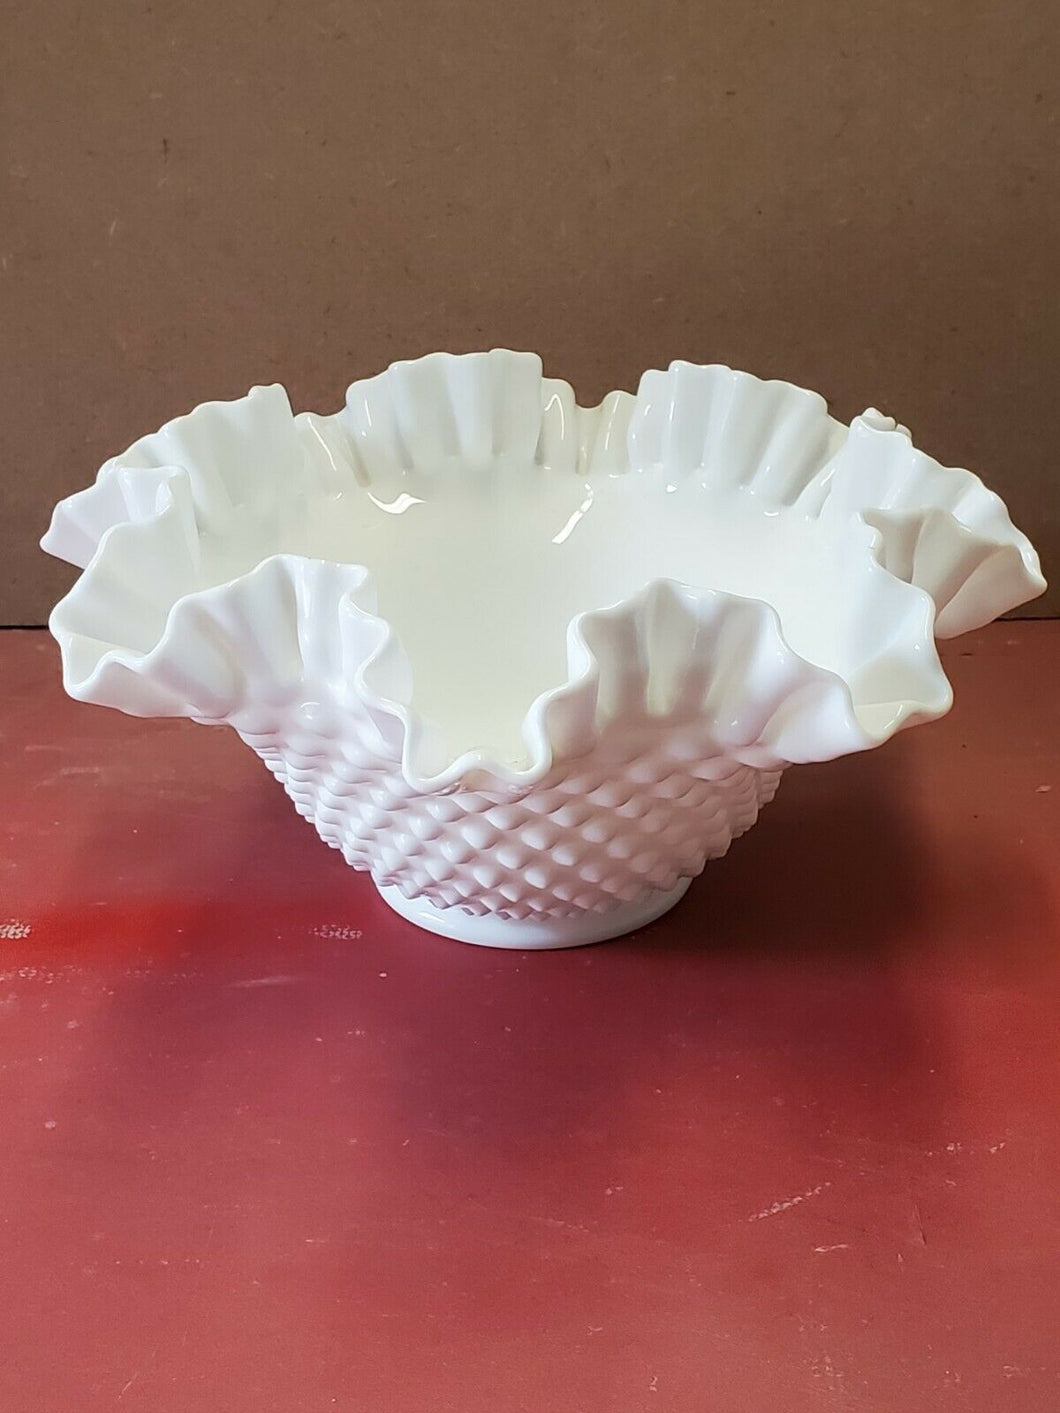 Vintage Fenton White Milk Glass Hobnail Ruffled Tall Flower Style Bowl